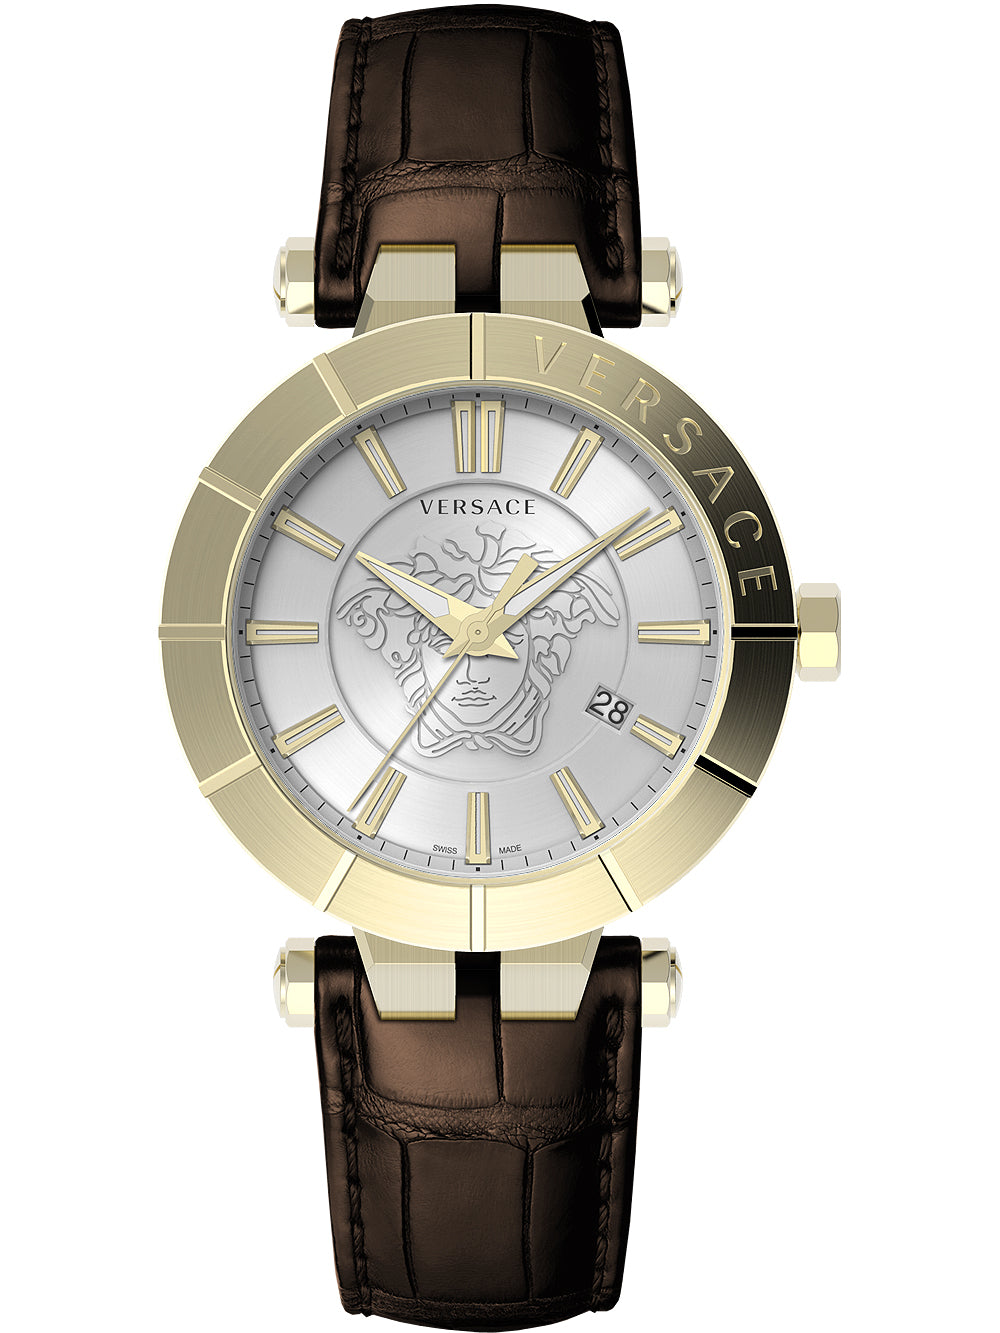 Versace Men's Watch V-Race 43mm White Gold VE2B00321